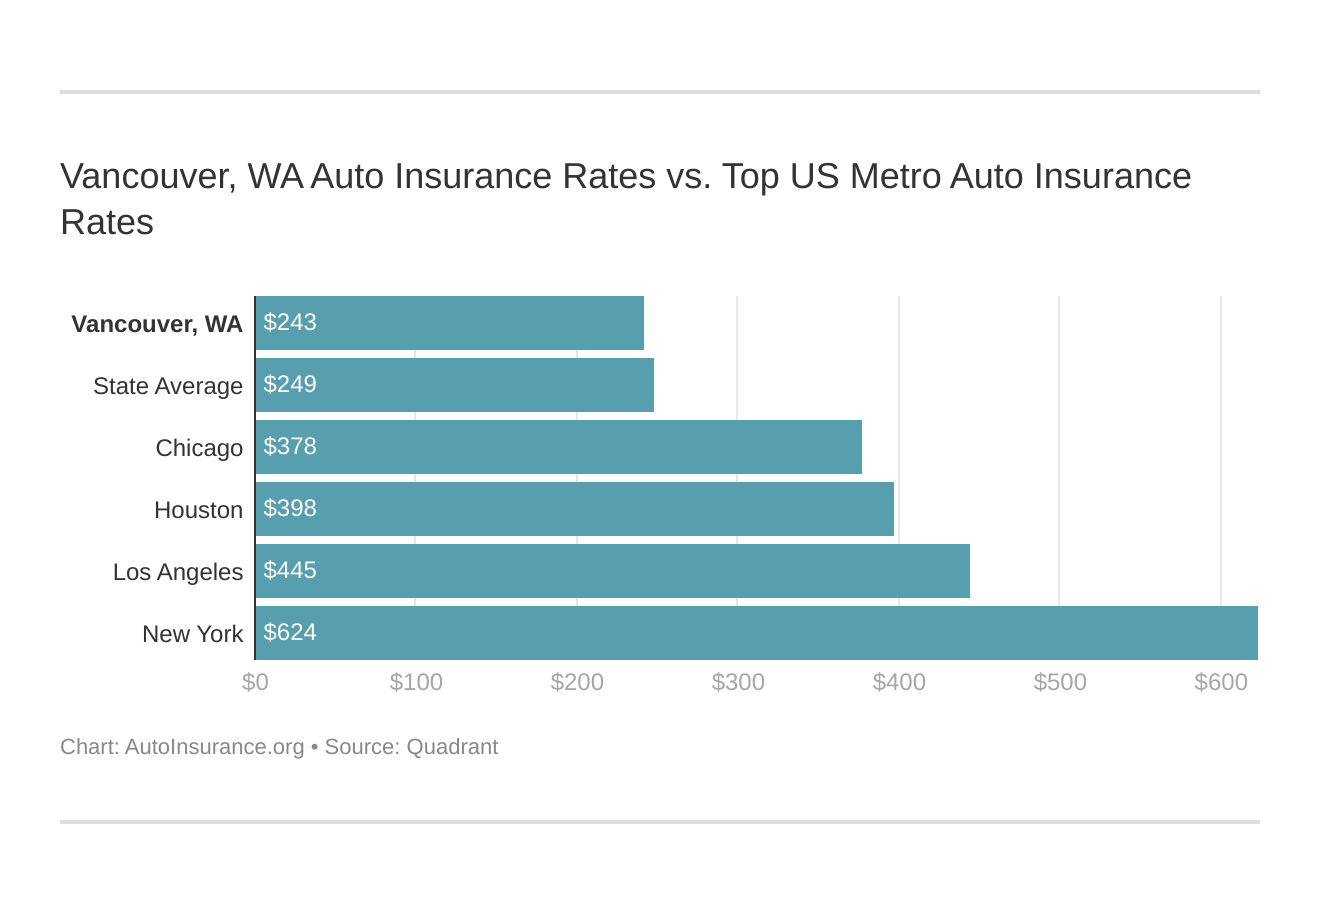 Vancouver, WA Auto Insurance Rates vs. Top US Metro Auto Insurance Rates